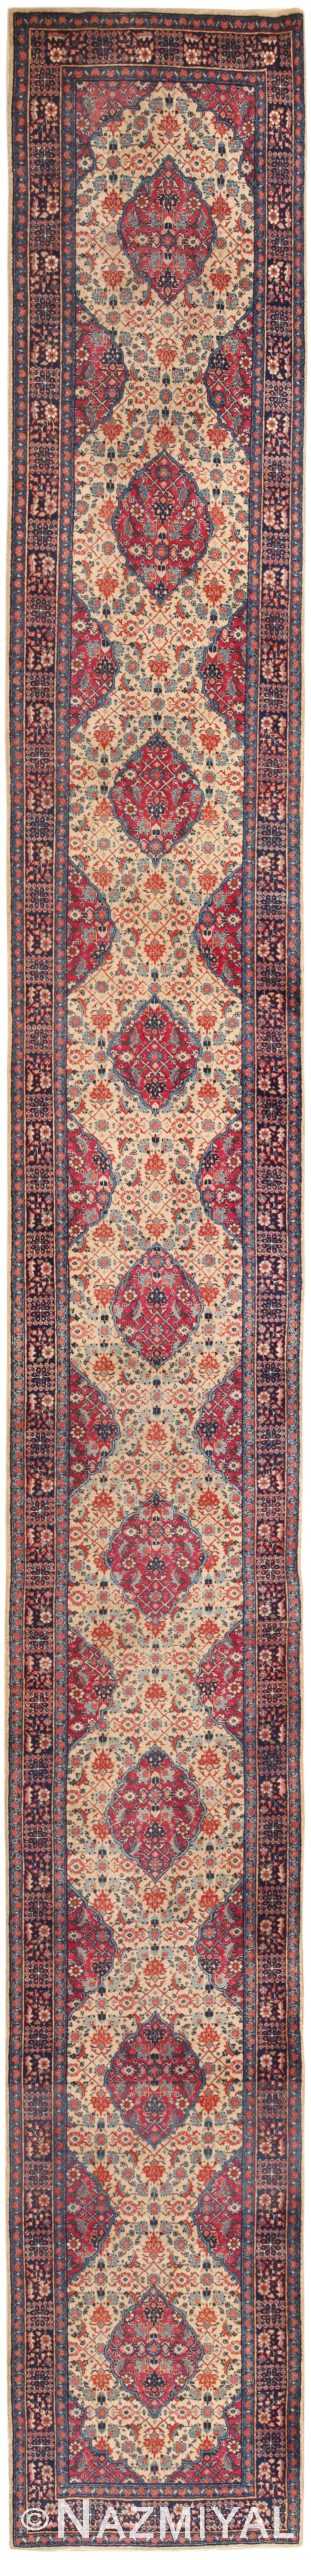 Long Antique Persian Tabriz Runner 46412 Nazmiyal Antique Rugs